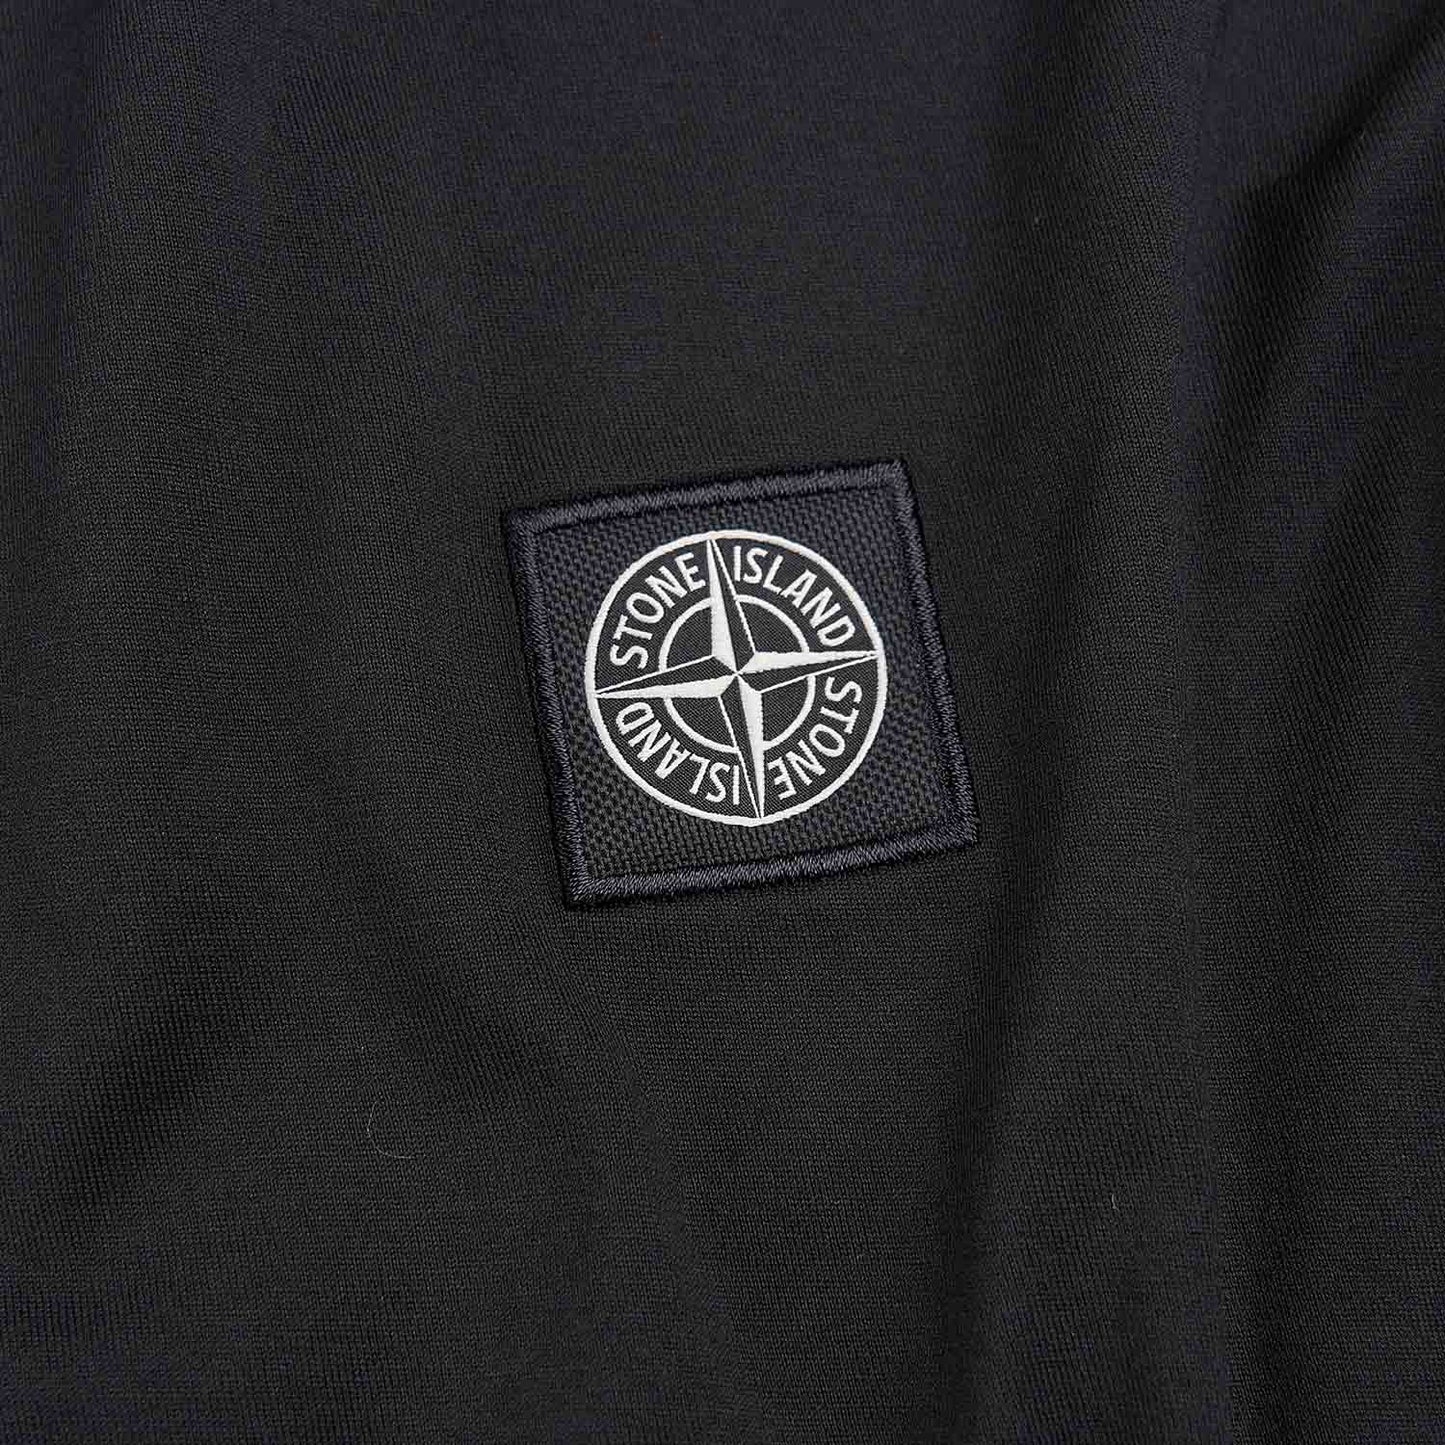 stone island t-shirt (black)